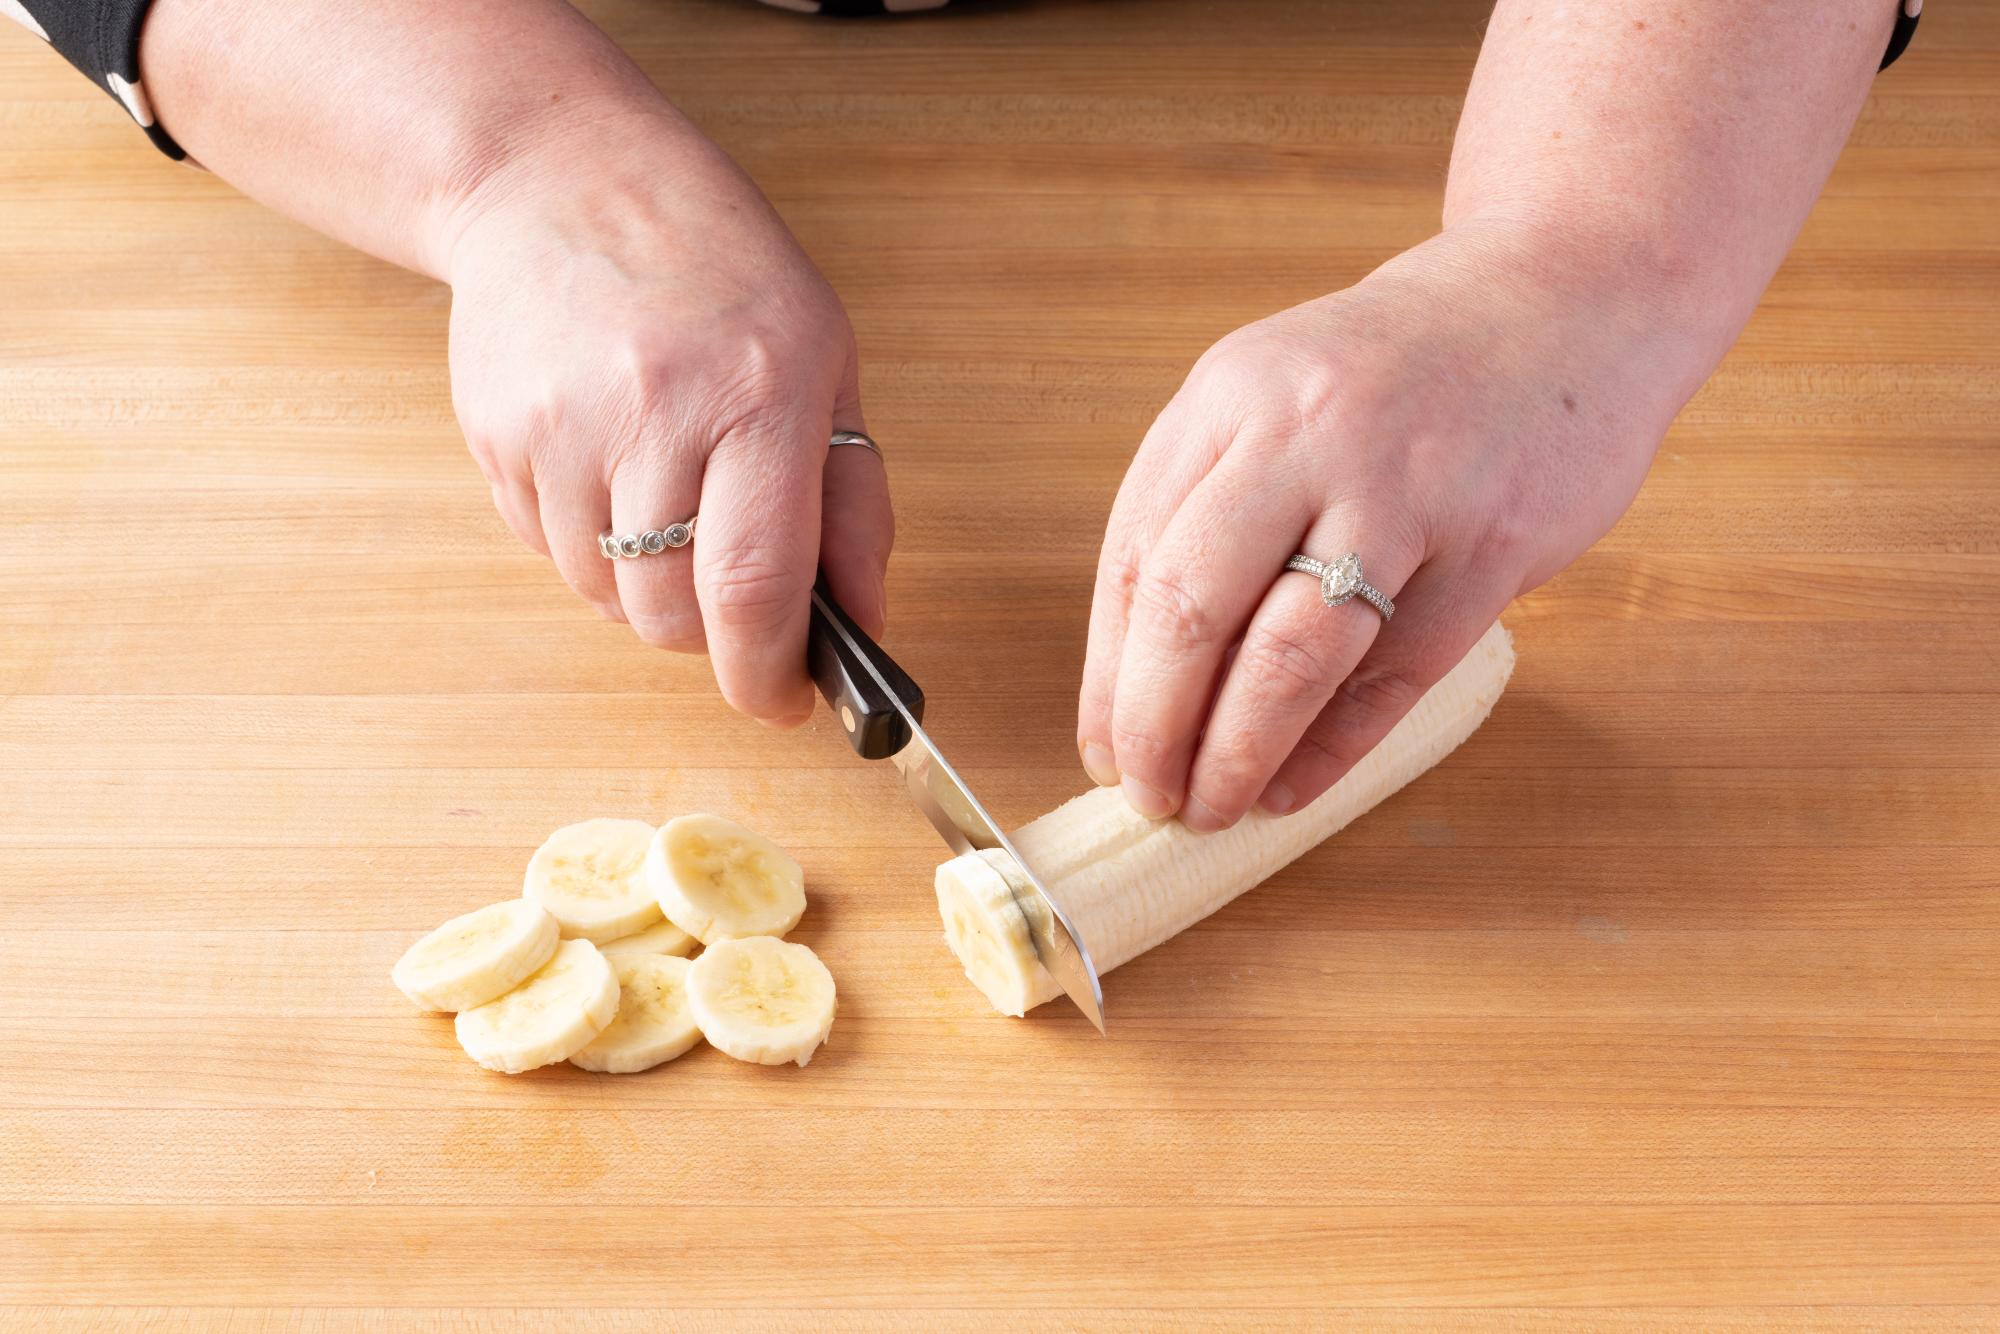 Using a Santoku-Style Paring Knife to Slice the banana.